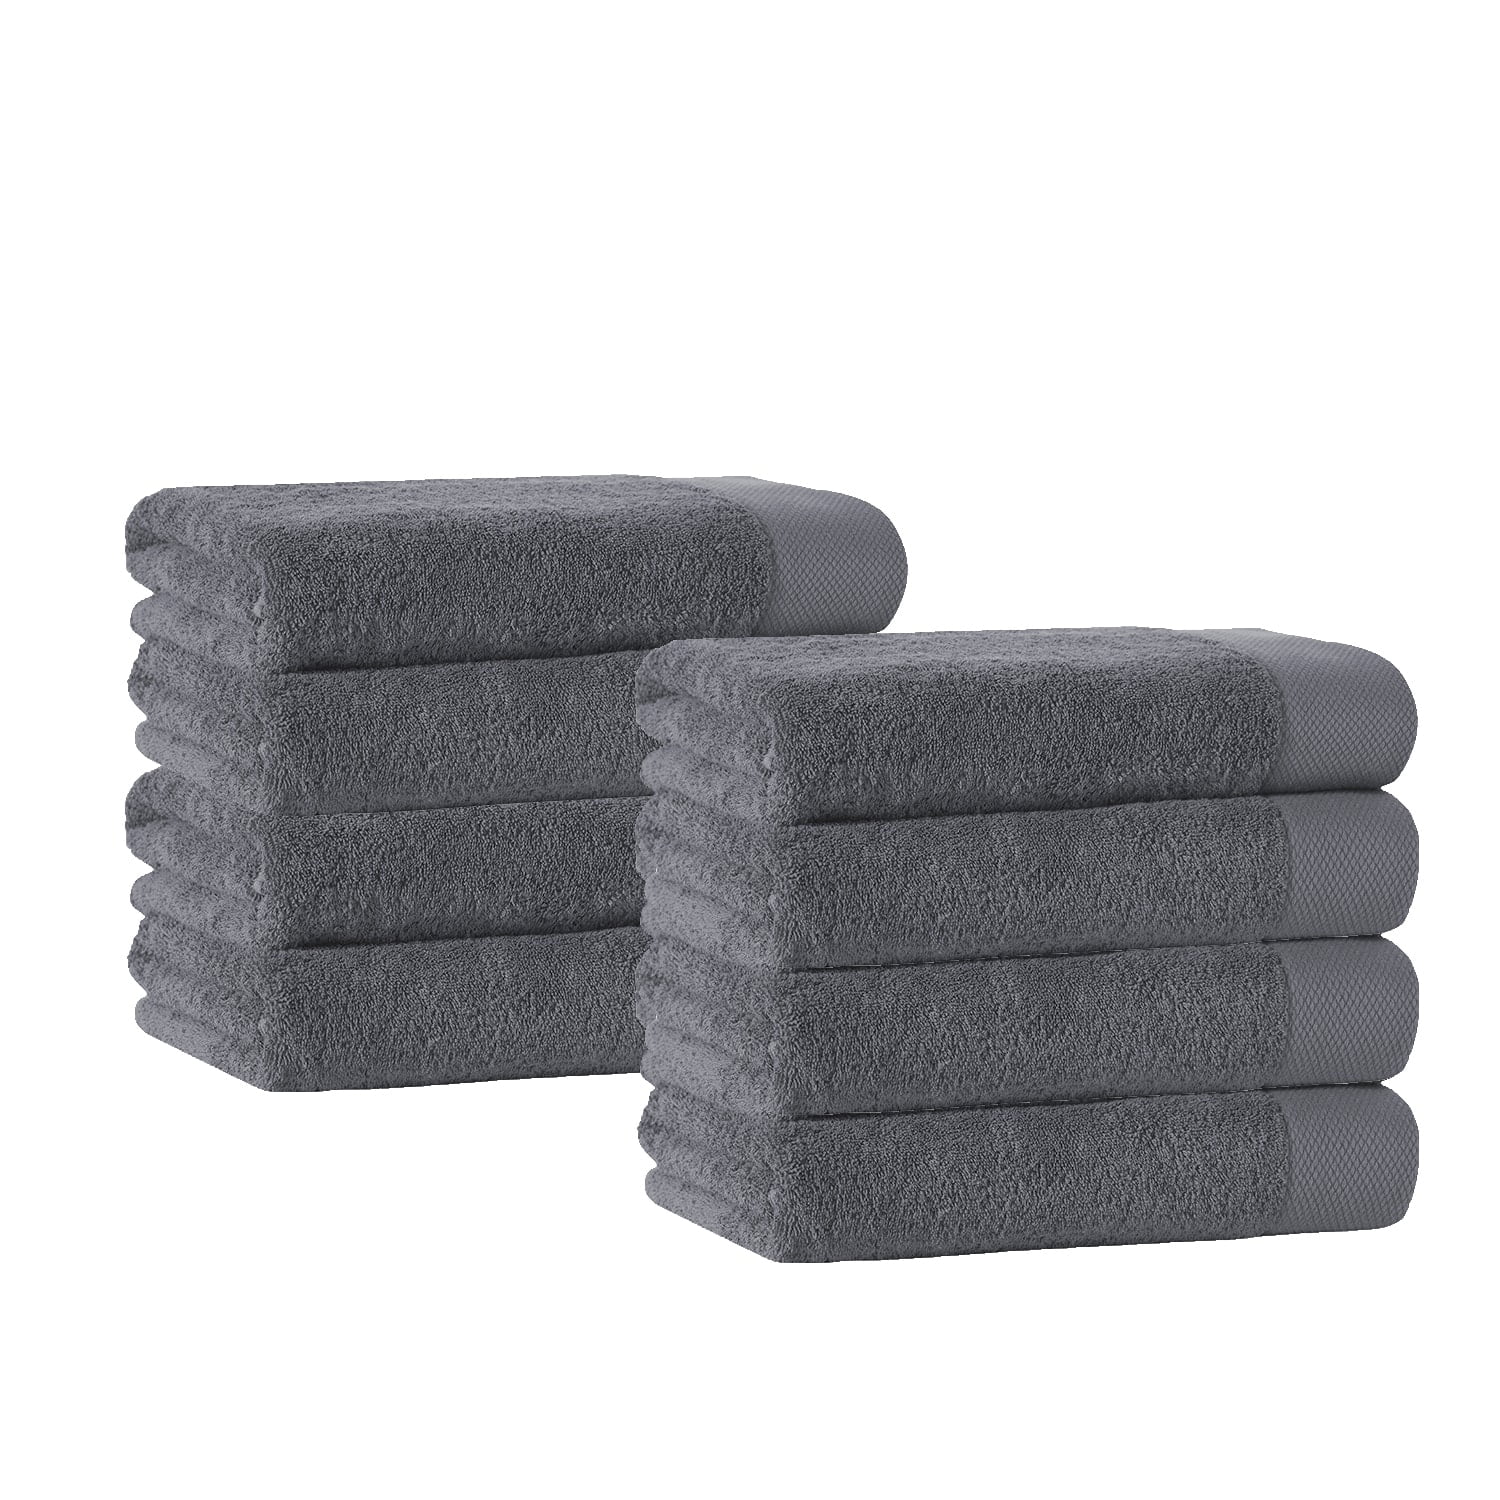 6 dozen salon hair hand towels soft 100% cotton 16x27 3#/dz dobby border premium 